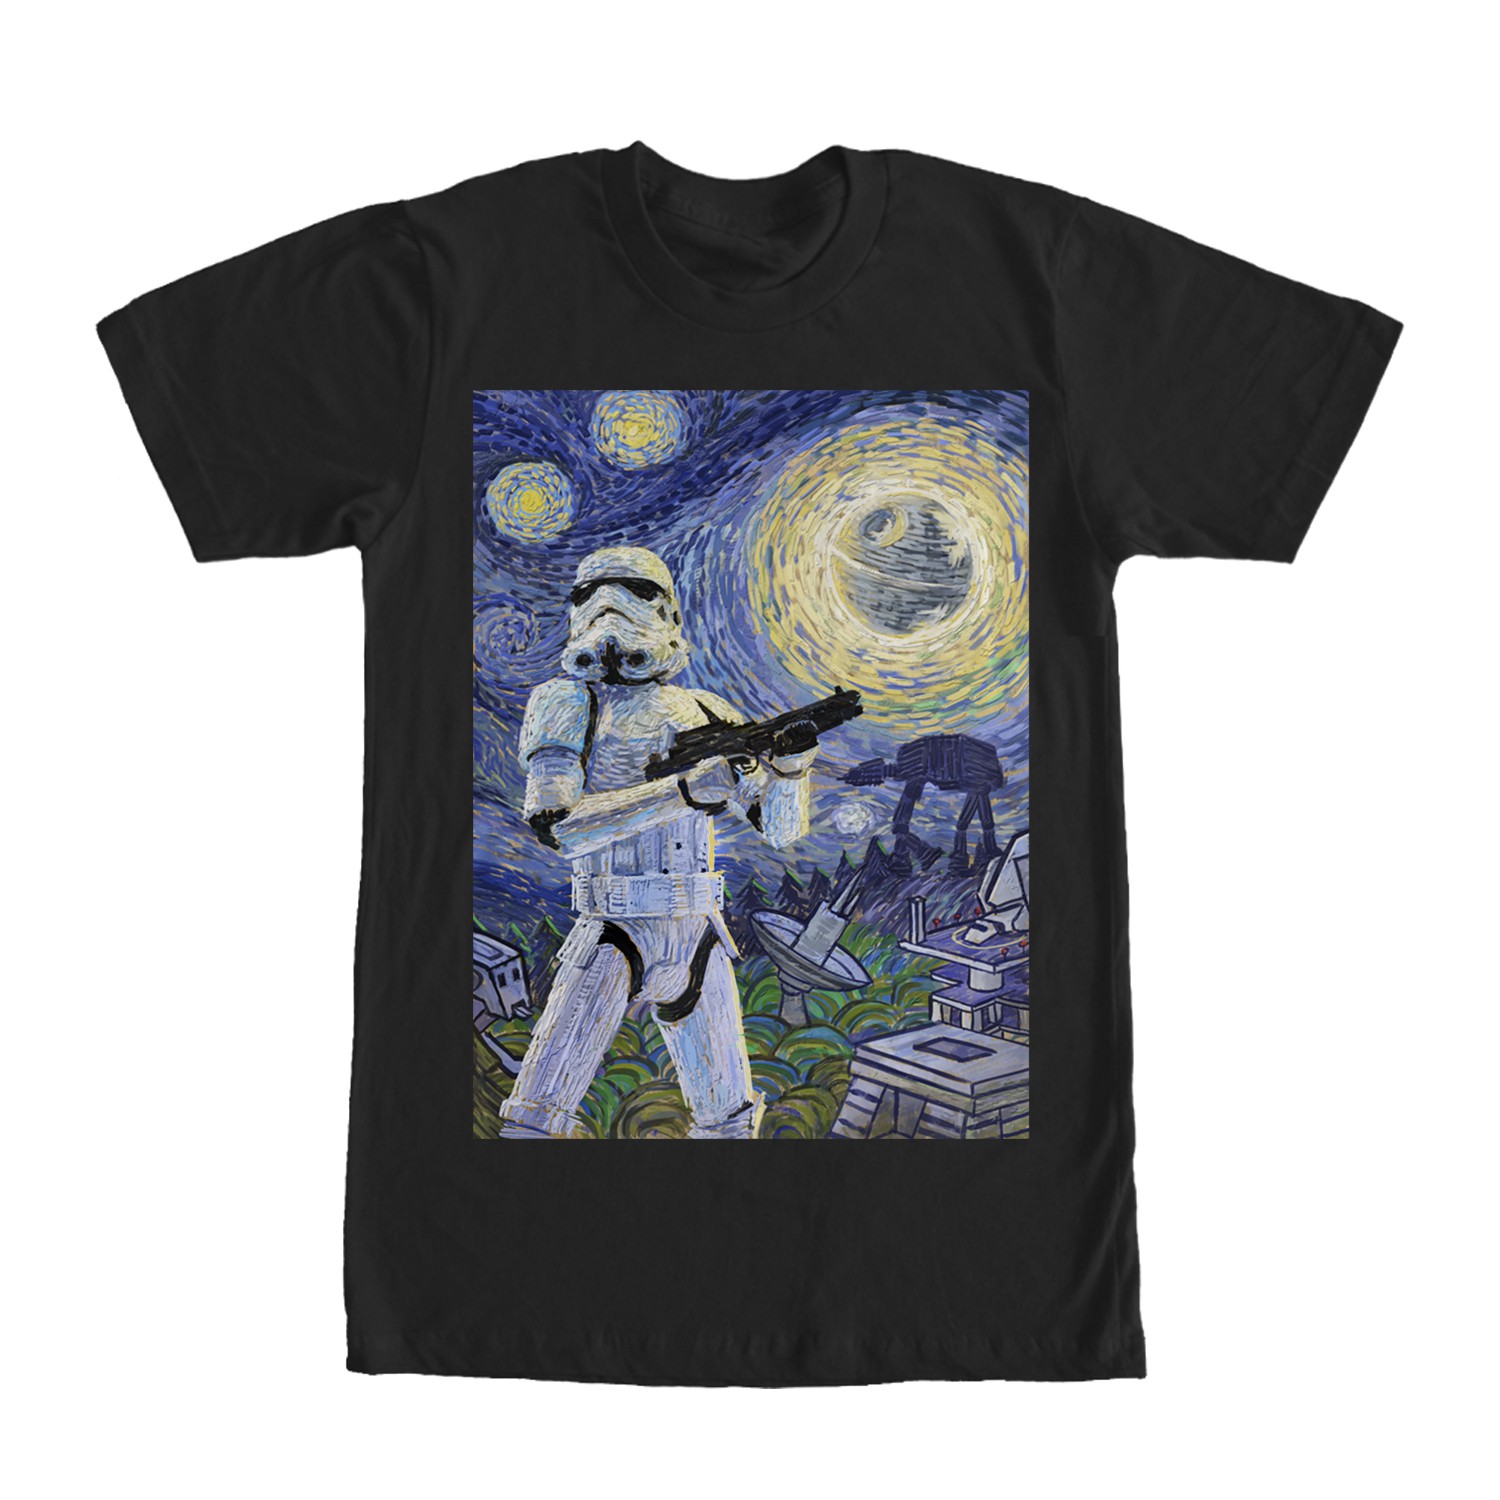 Star Wars Stormy Night Black T-Shirt. 